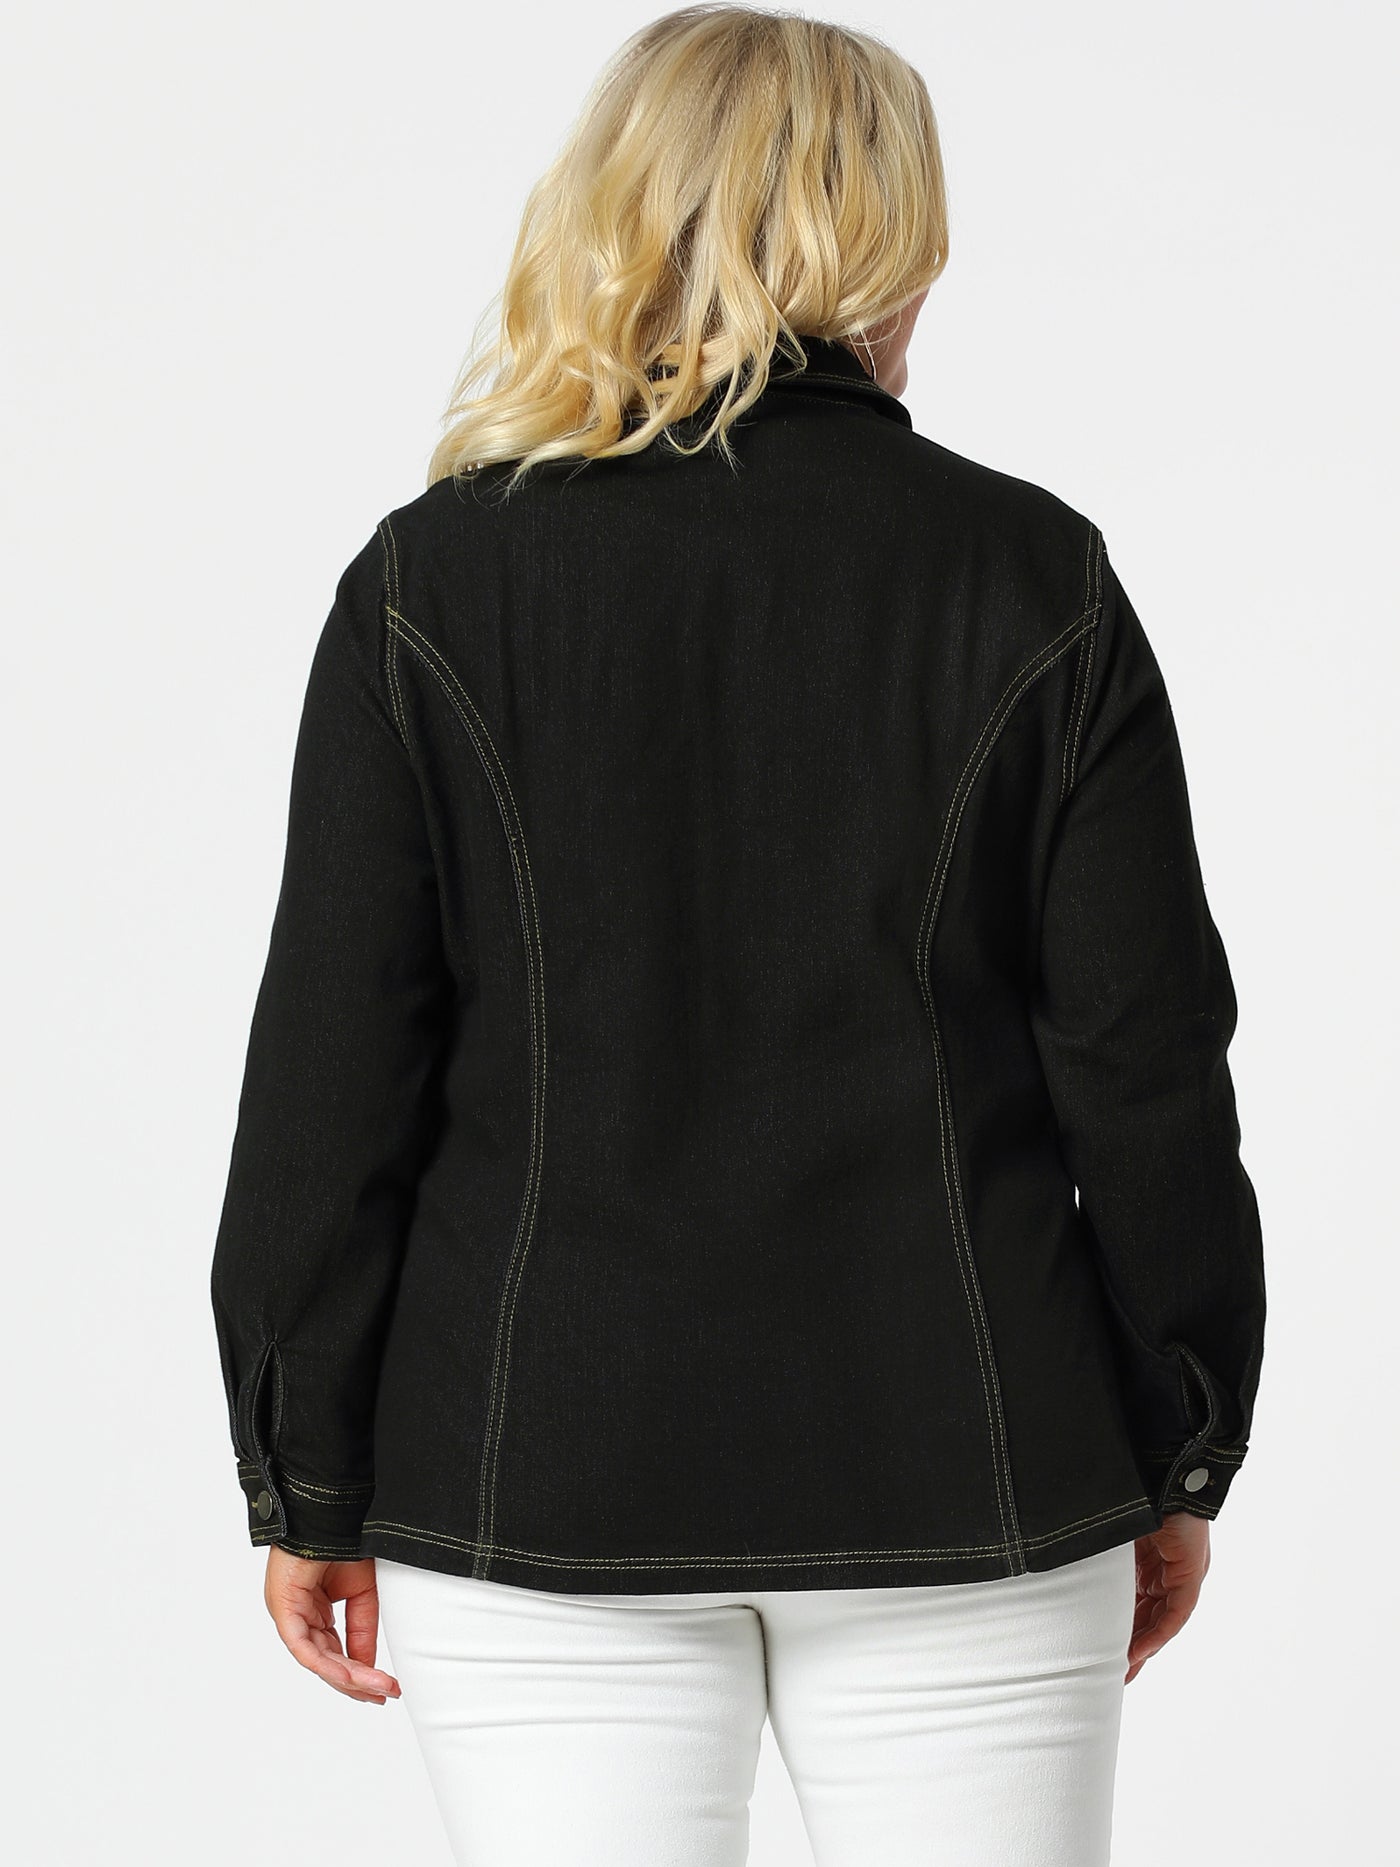 Bublédon Women's Plus Size Zip Up Washed Denim Jacket with Pockets